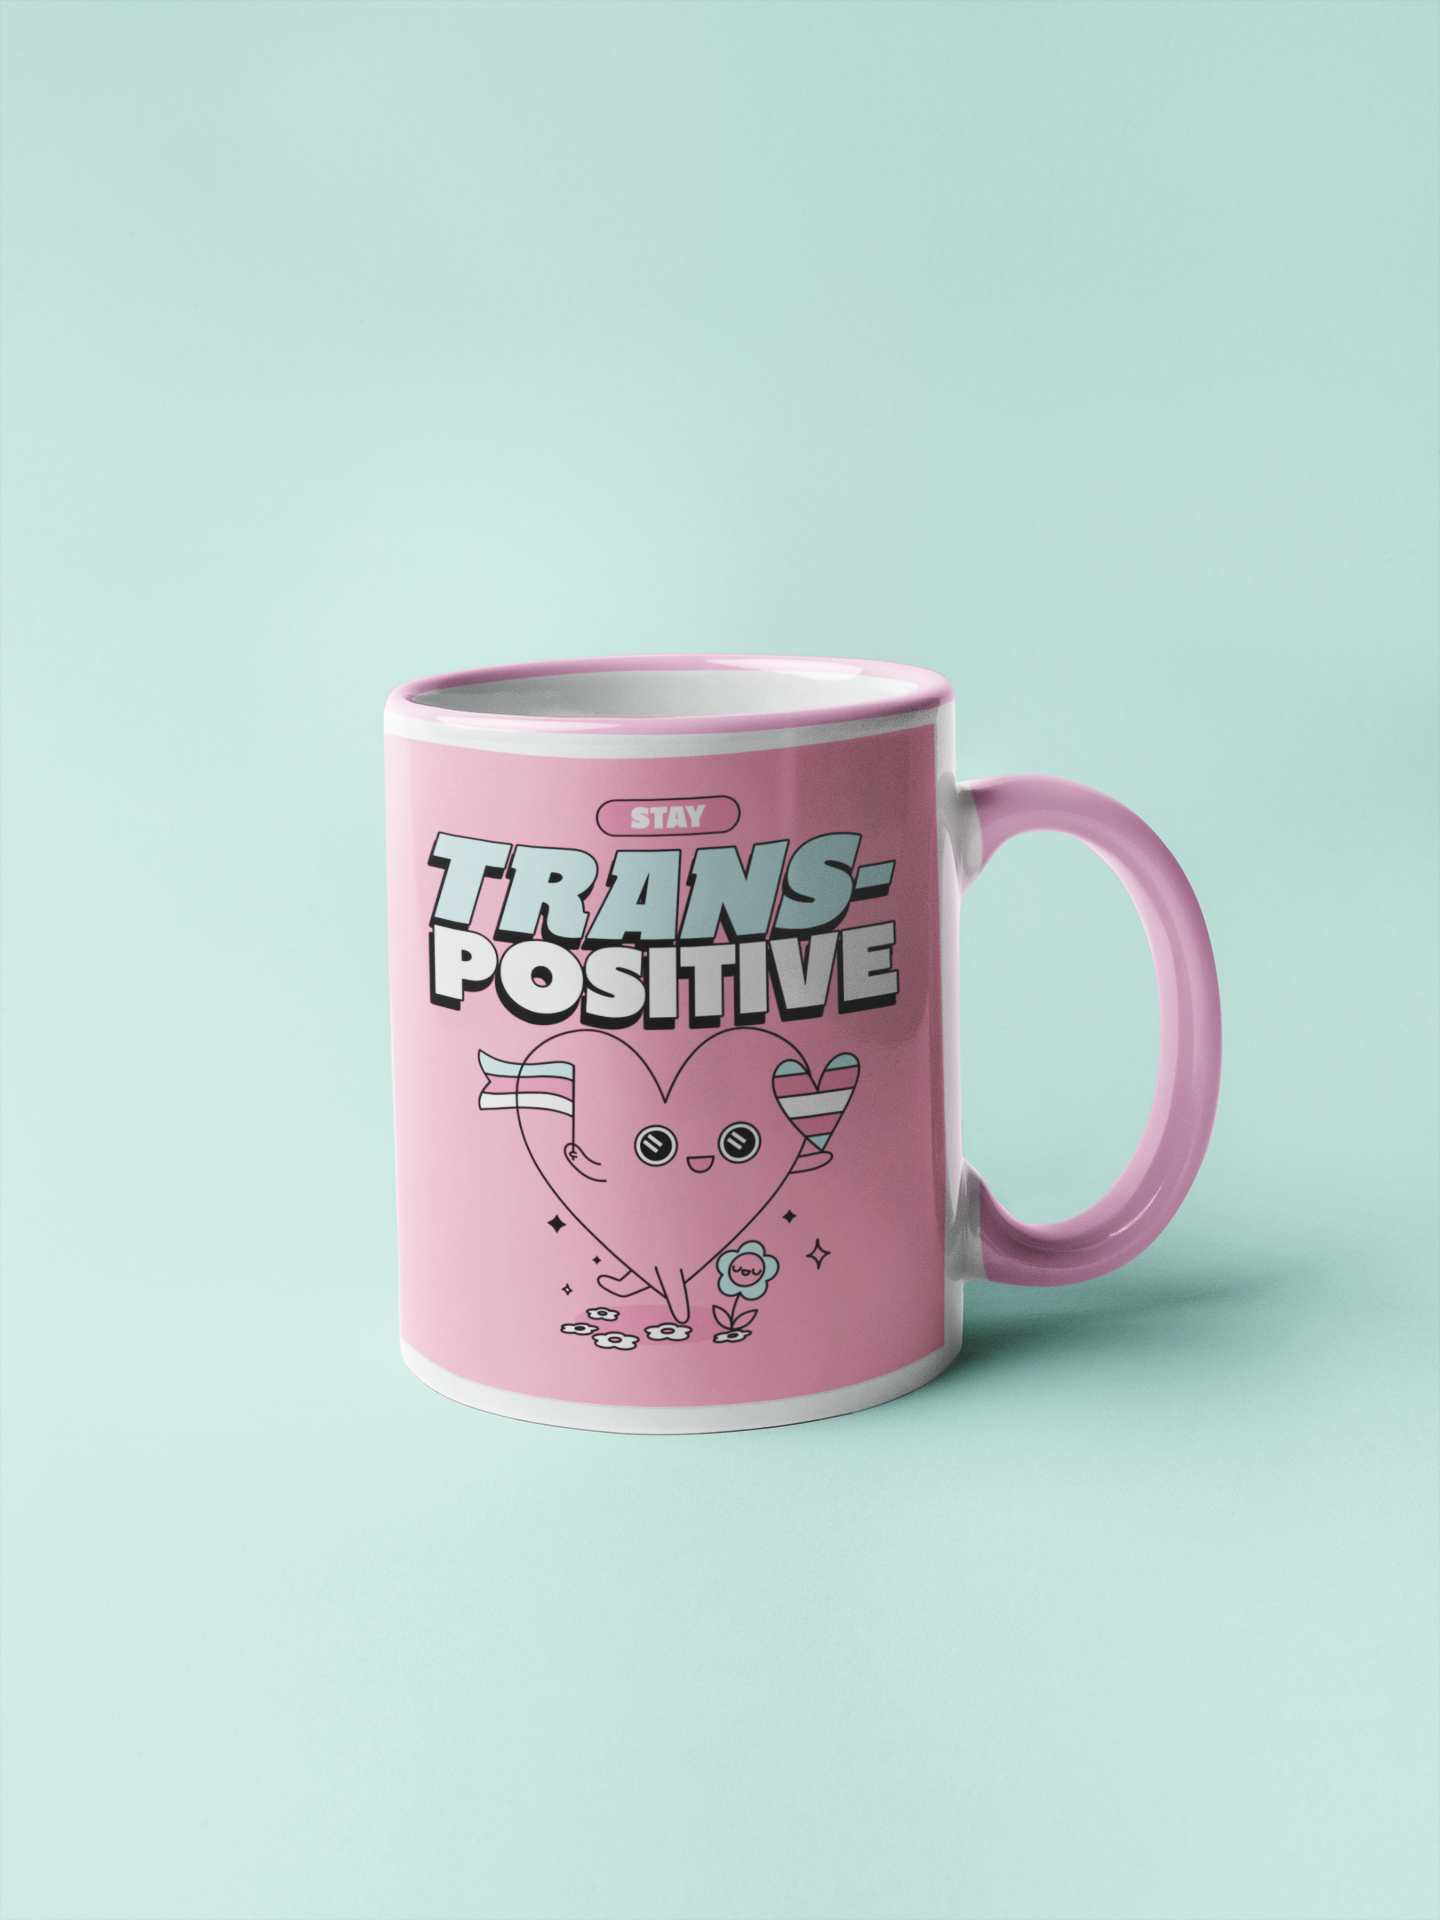 Mug - Stay Trans Positive